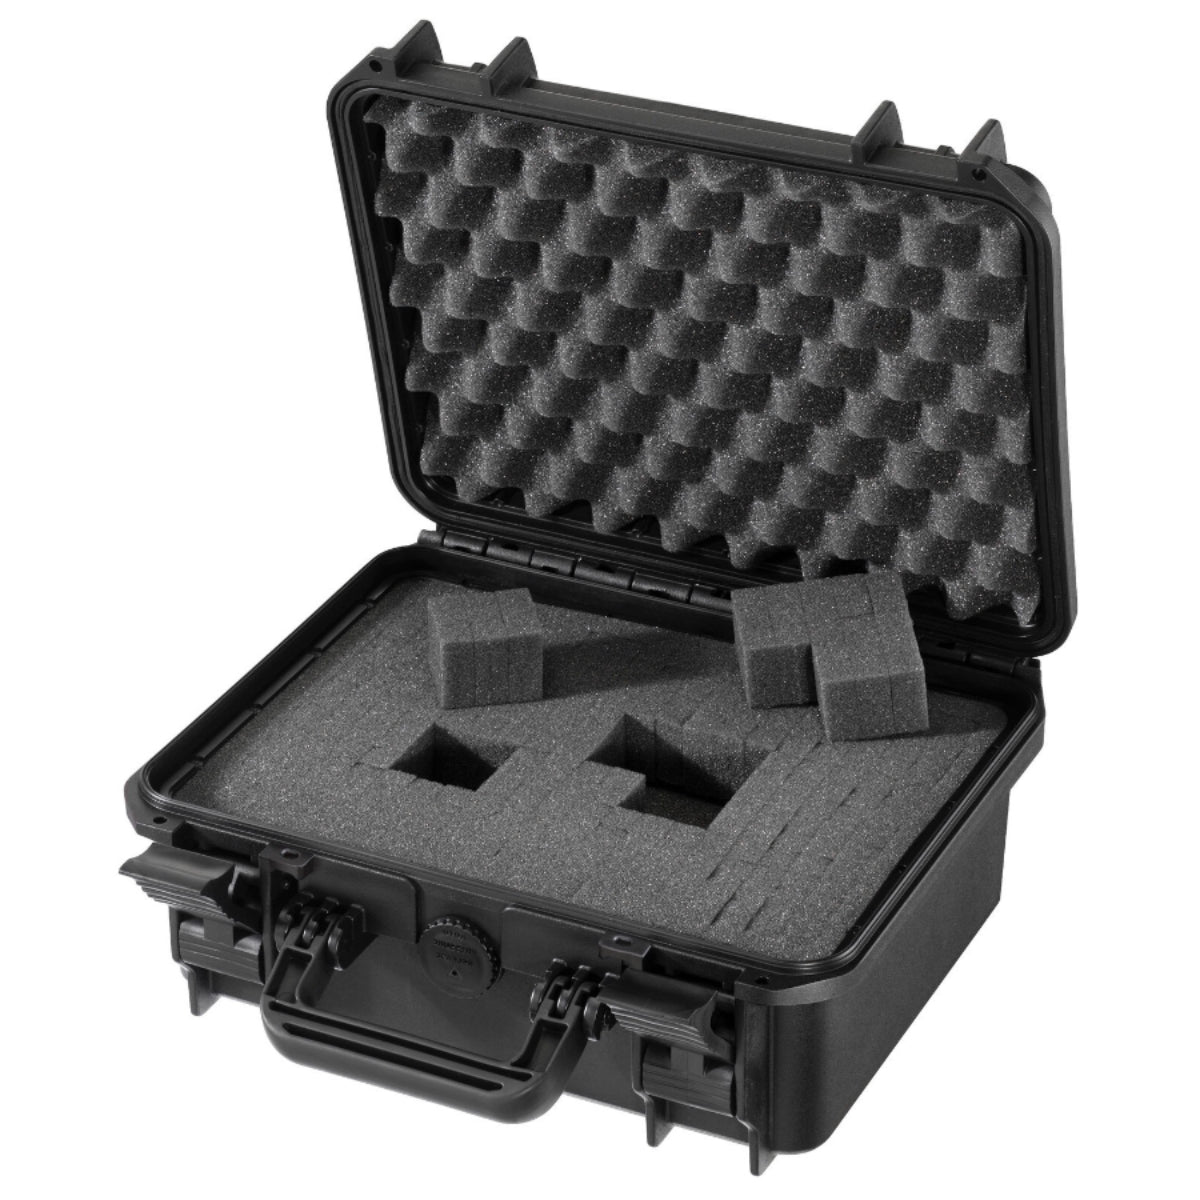 SP PRO 300S Black Carry Case, Cubed Foam, ID: L300xW225xH132mm